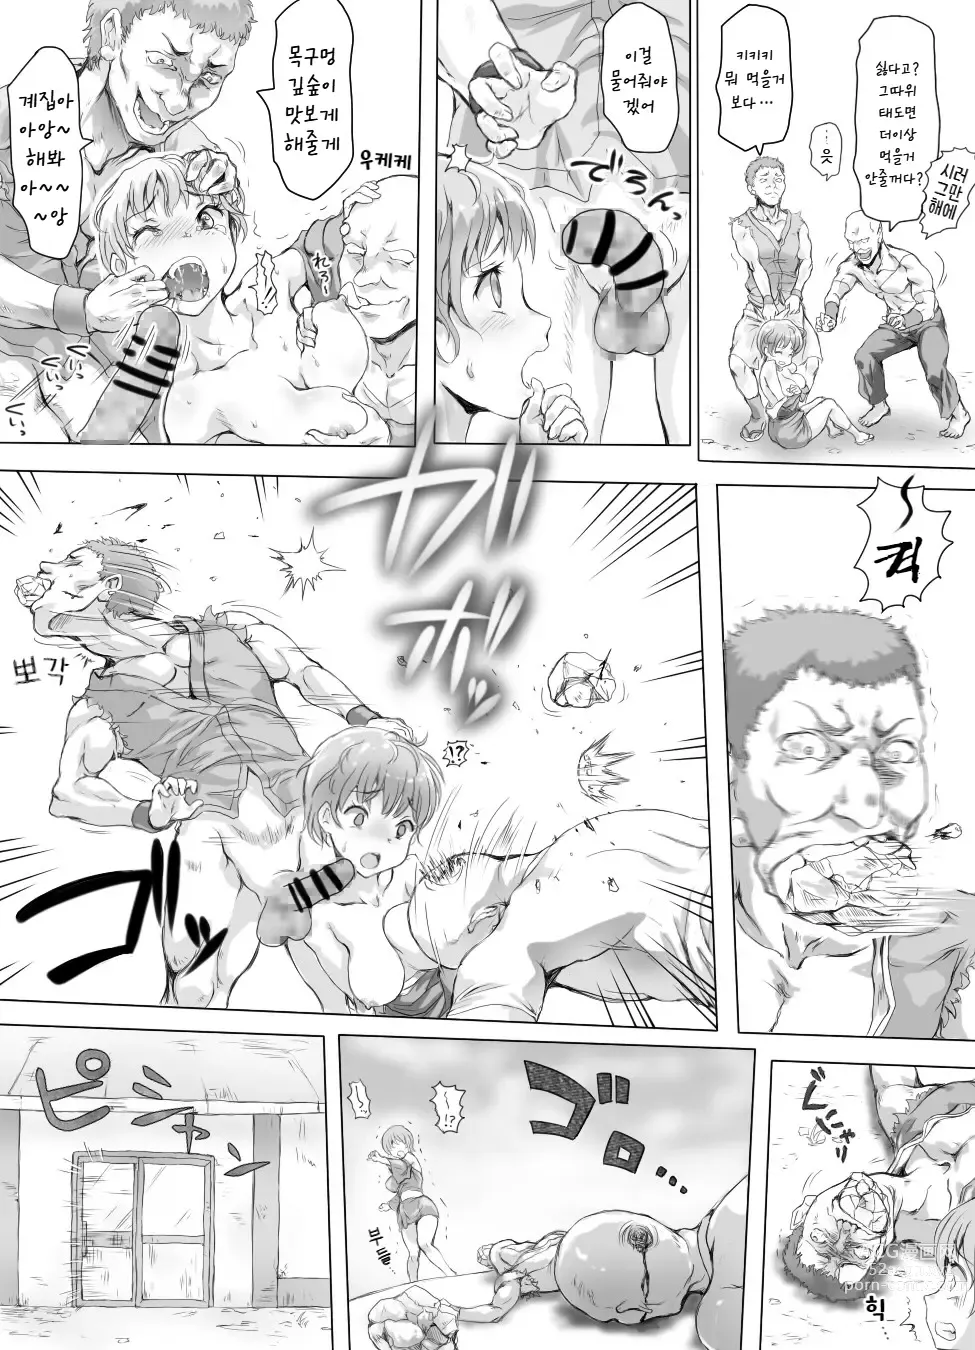 Page 5 of doujinshi 음착소녀 ~이렇게까지 굴욕을 당했는데도 아직도 살고 싶은 거니?~